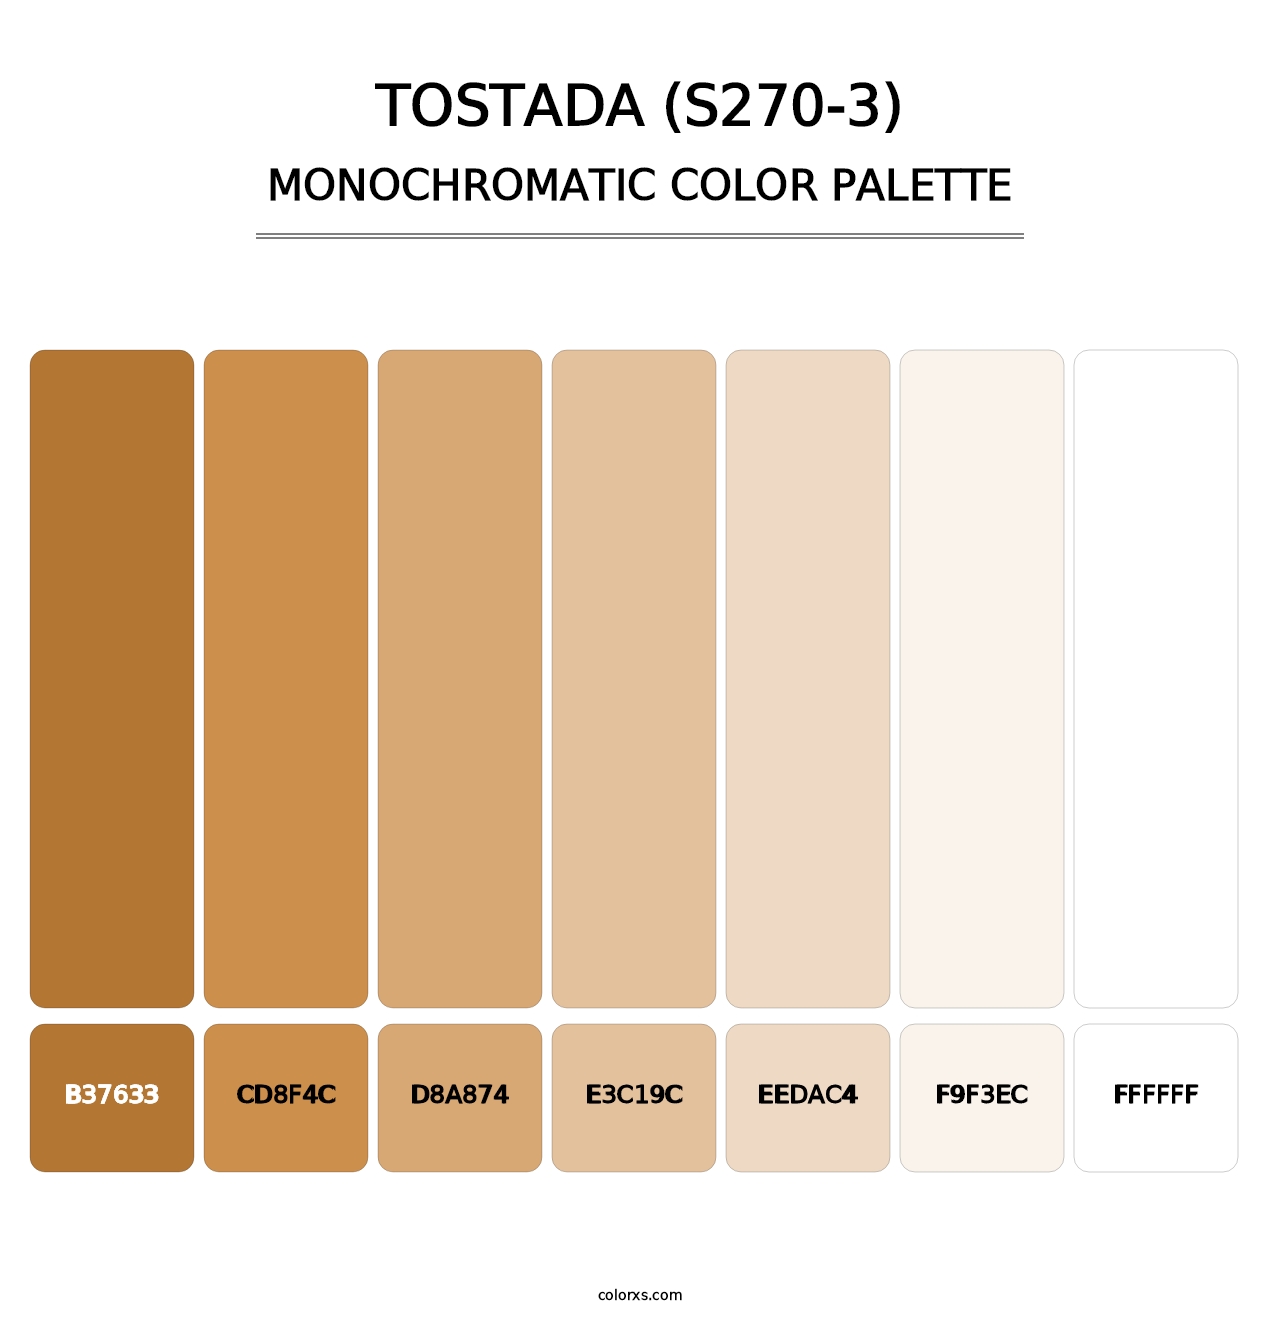 Tostada (S270-3) - Monochromatic Color Palette